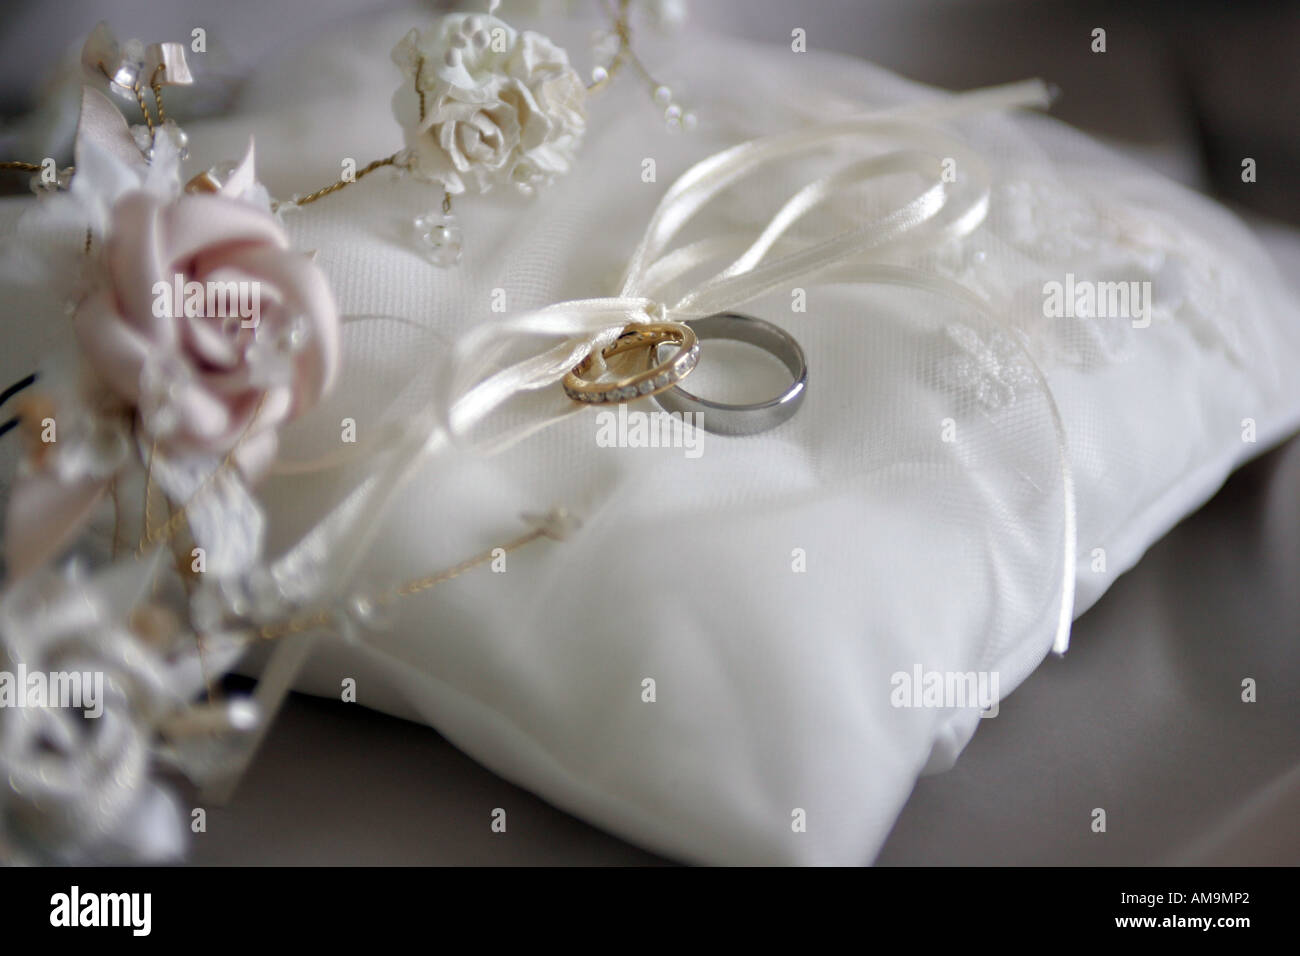 Un retrato de cerca de un anillo de bodas atado a una cinta blanca sobre un cojín blanco Foto de stock